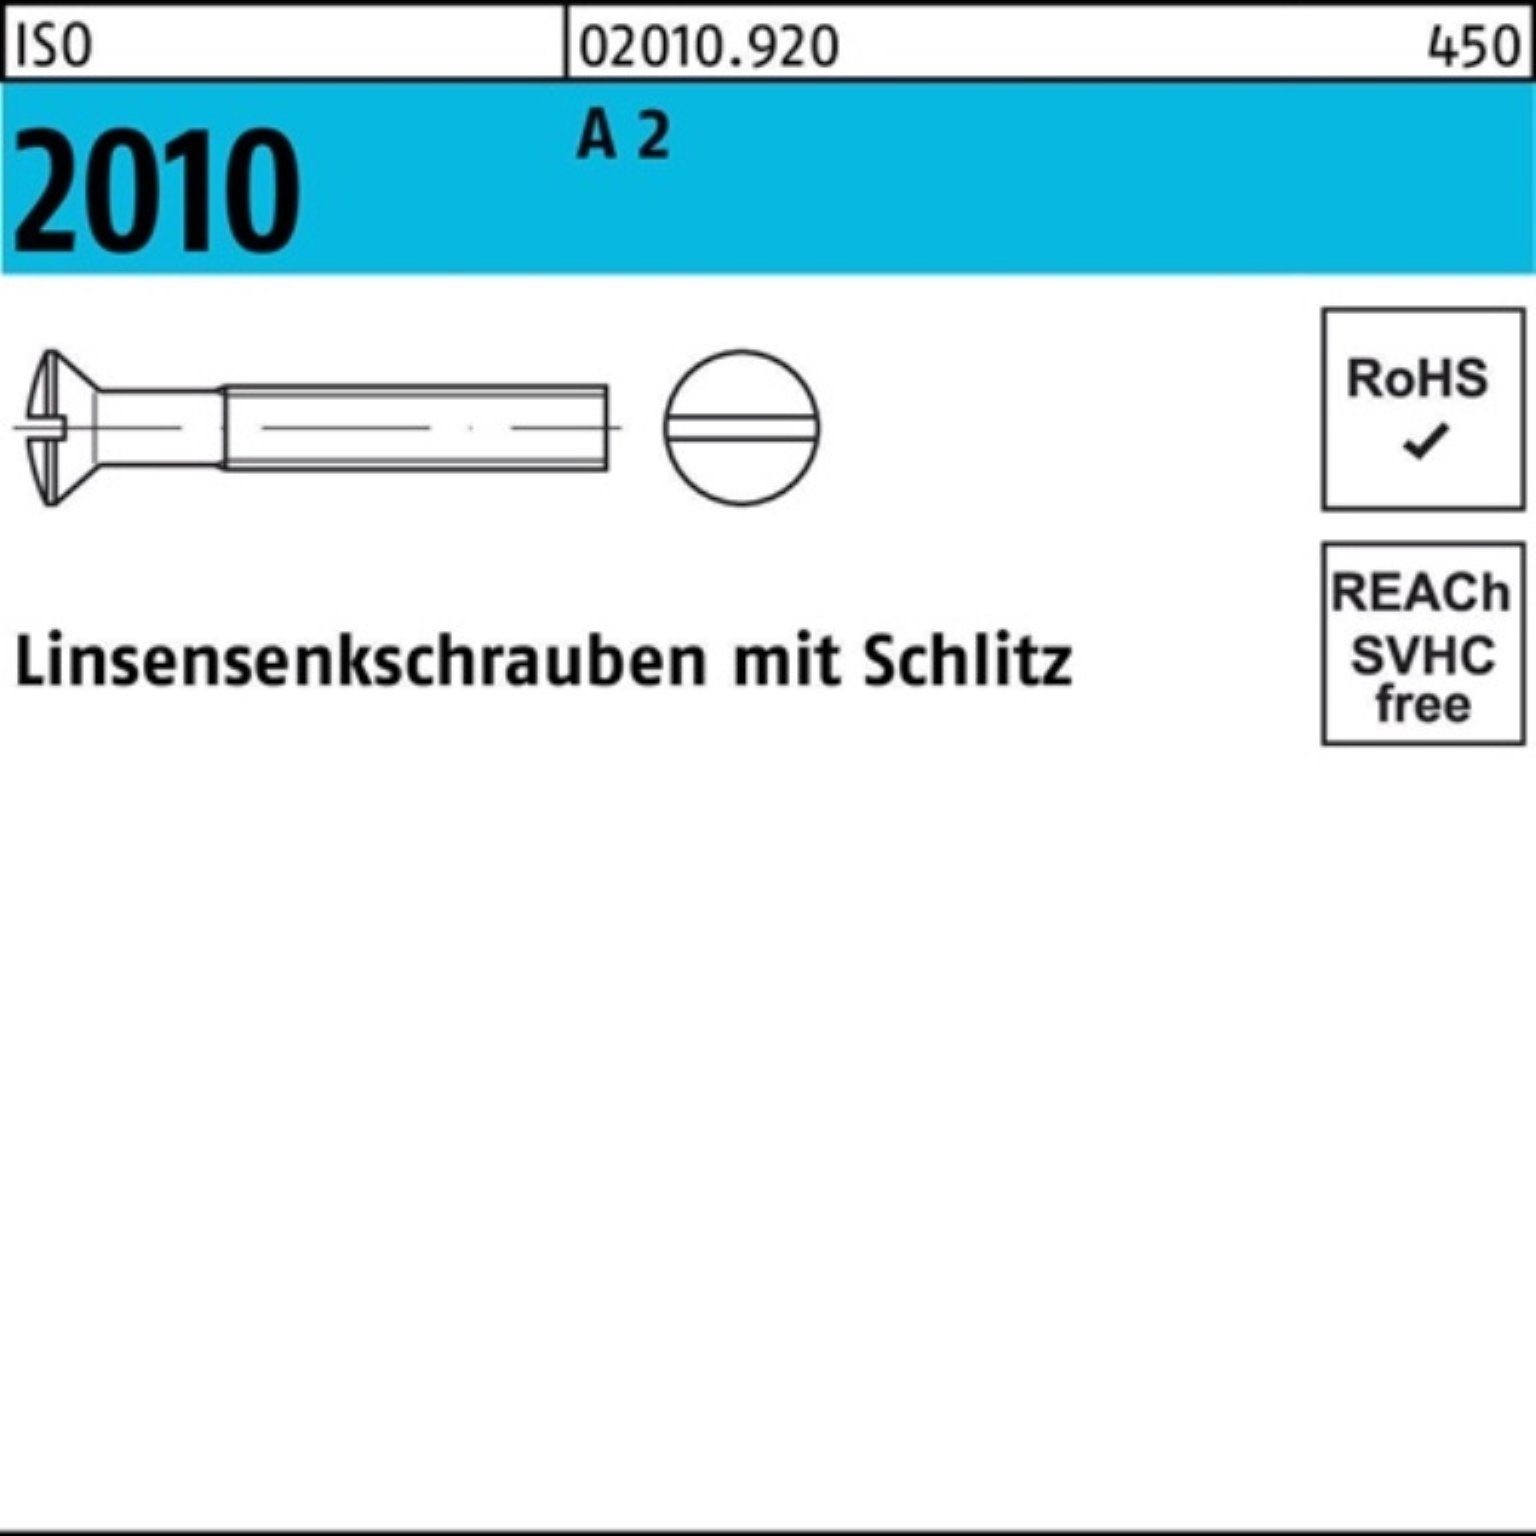 2010 2 M5x Linsenschraube Schlitz 500er Reyher A 30 Pack 500 I ISO Stück Linsensenkschraube